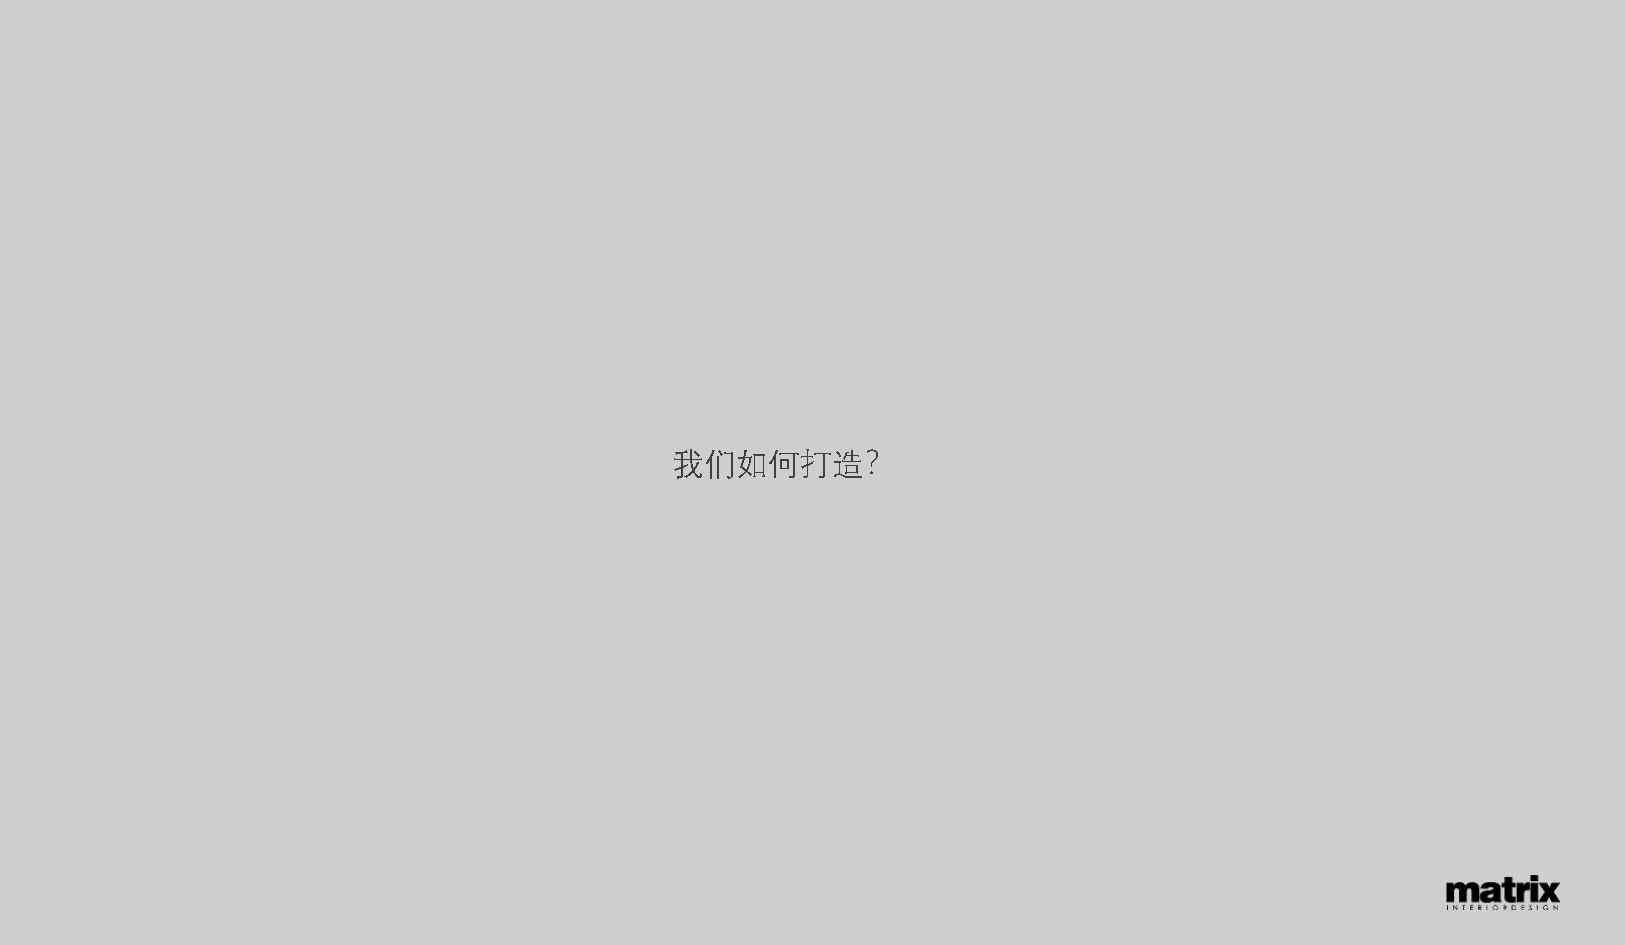  20210417 ¥_Page8.jpg